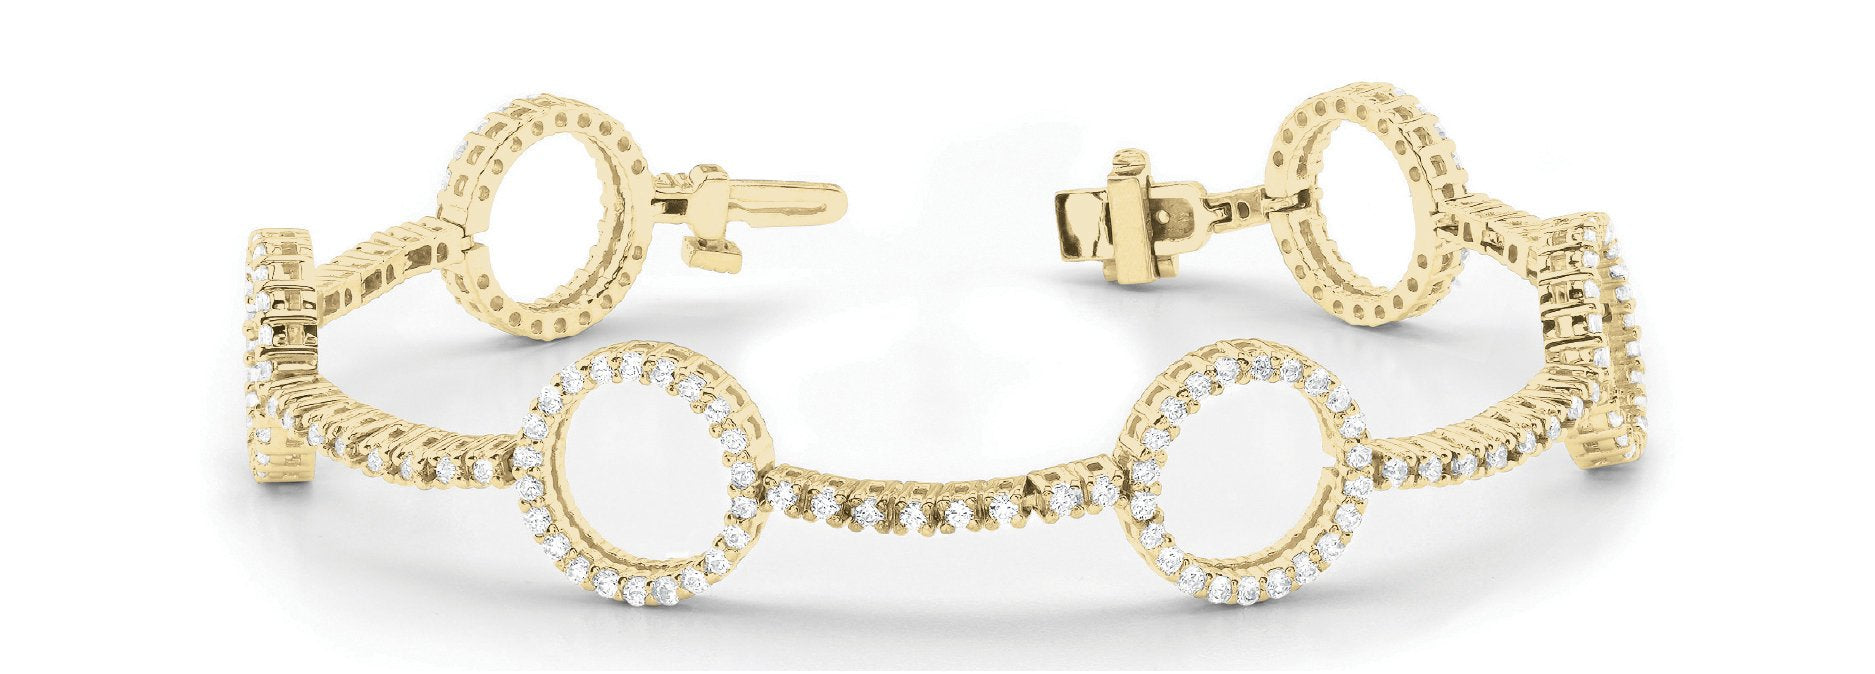 Fancy Diamond Bracelet Ladies 2.13ct tw - 14kt Yellow Gold